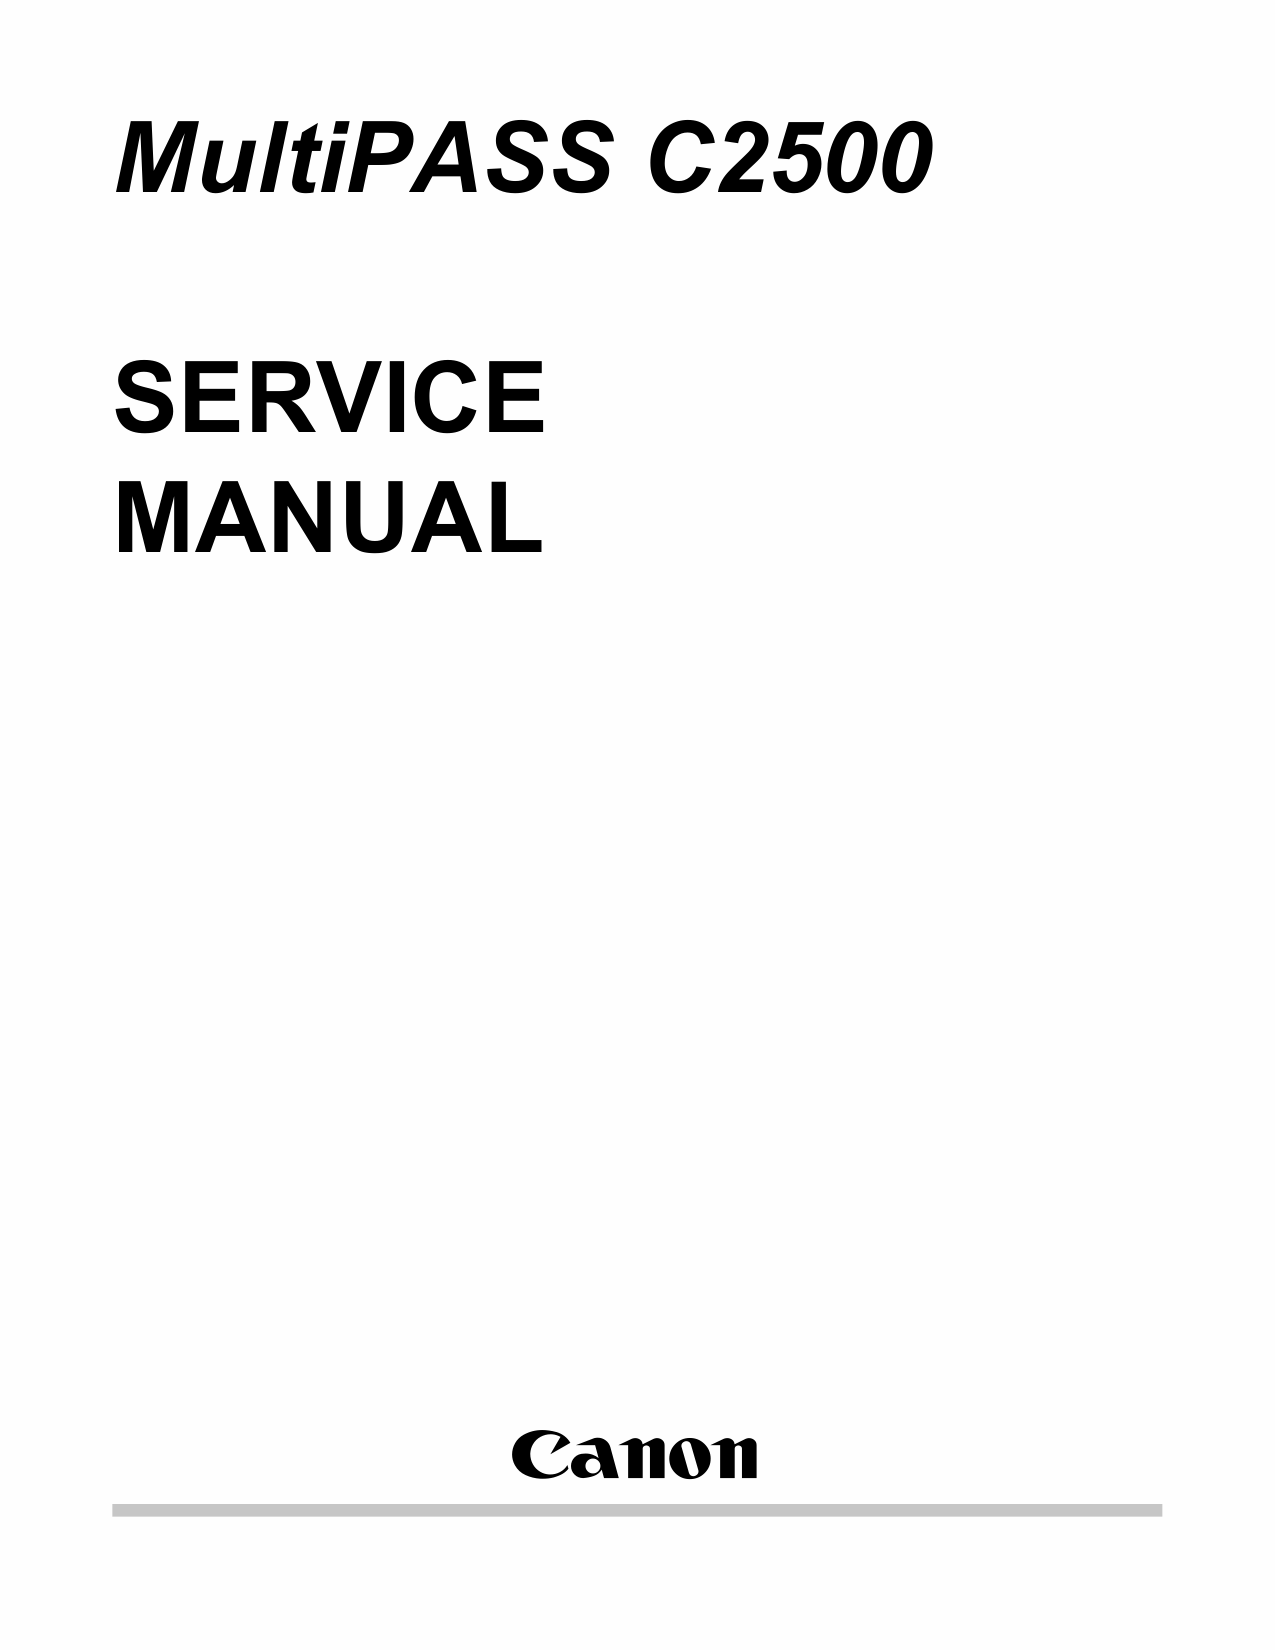 Canon MultiPASS MP-C2500 Service Manual-1